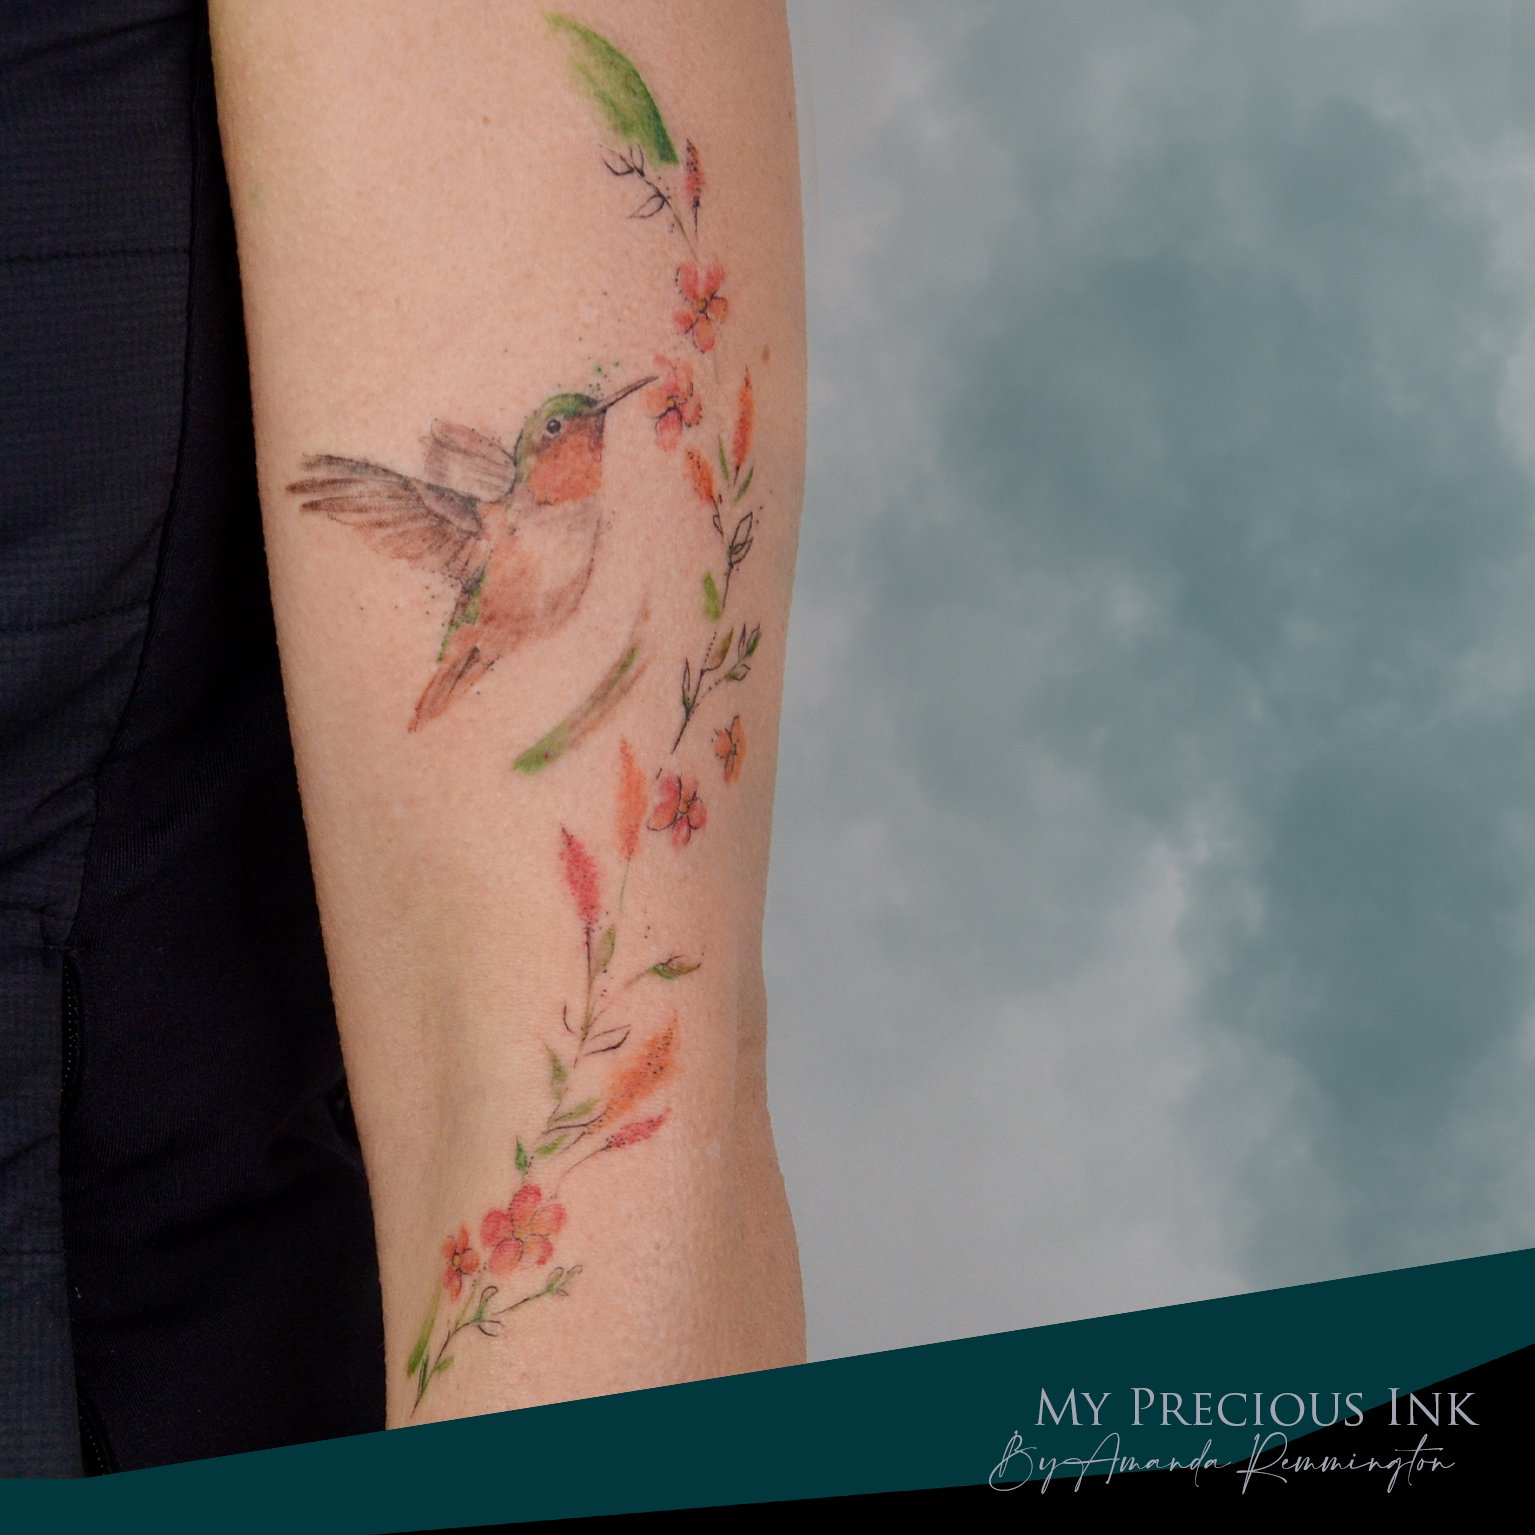 beautiful hummingbird with flowers

///&mdash;&mdash;&gt; www.mypreciousink.nl &lt;&mdash;&mdash;\\\

#Tattoo #watercolortattoo #watercolourtattoo #watercolor #thebesttattooartists #tattoodo 
  #tattooart #tattooflower #tattooidea #thebestbelgiumtatt